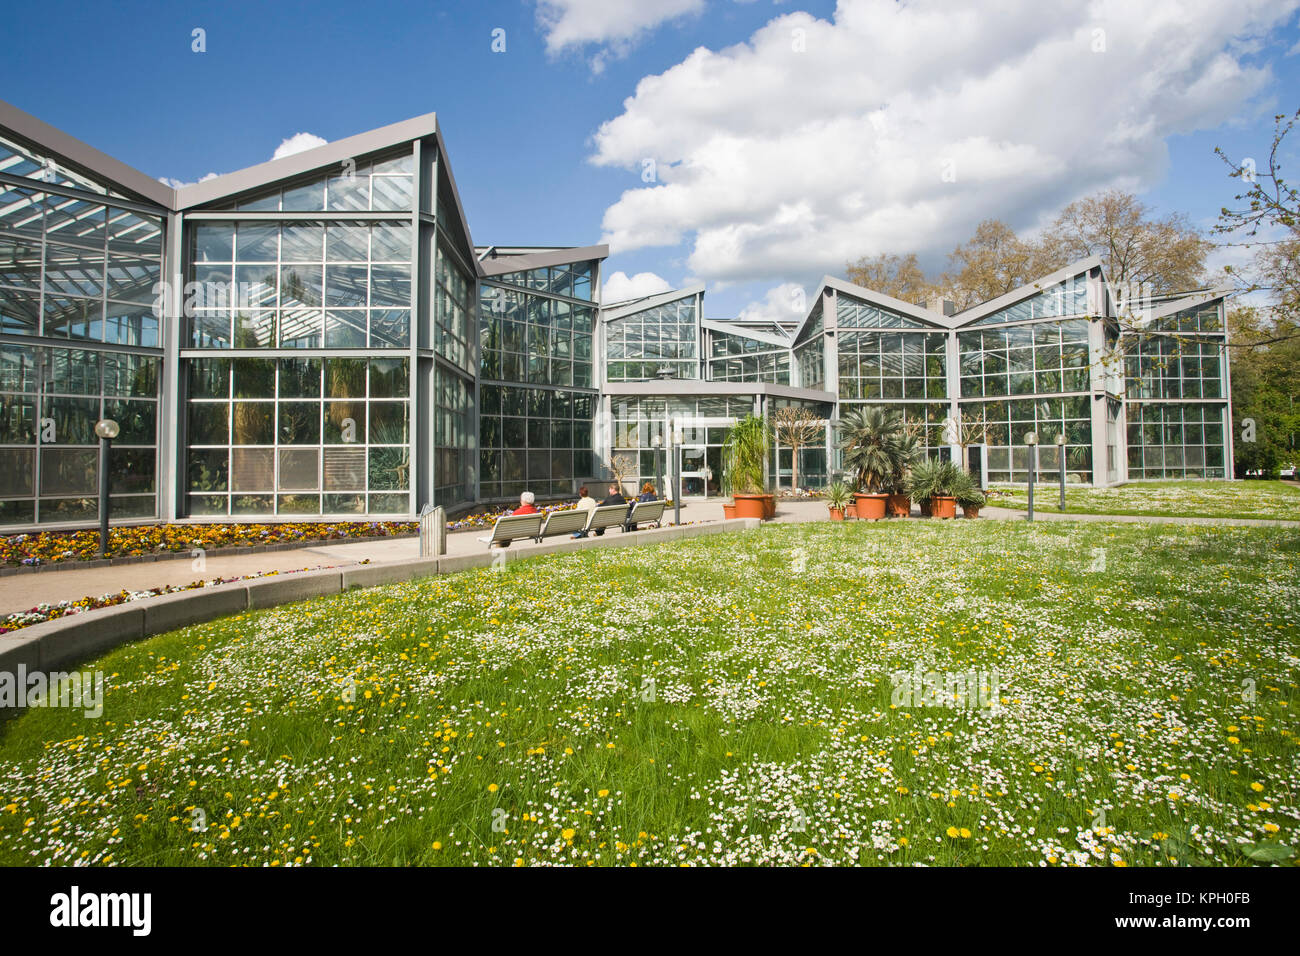 Germany, Hessen, Frankfurt am Main. Palmengarten, Palm Garden, view of greenhouse exterior. Stock Photo